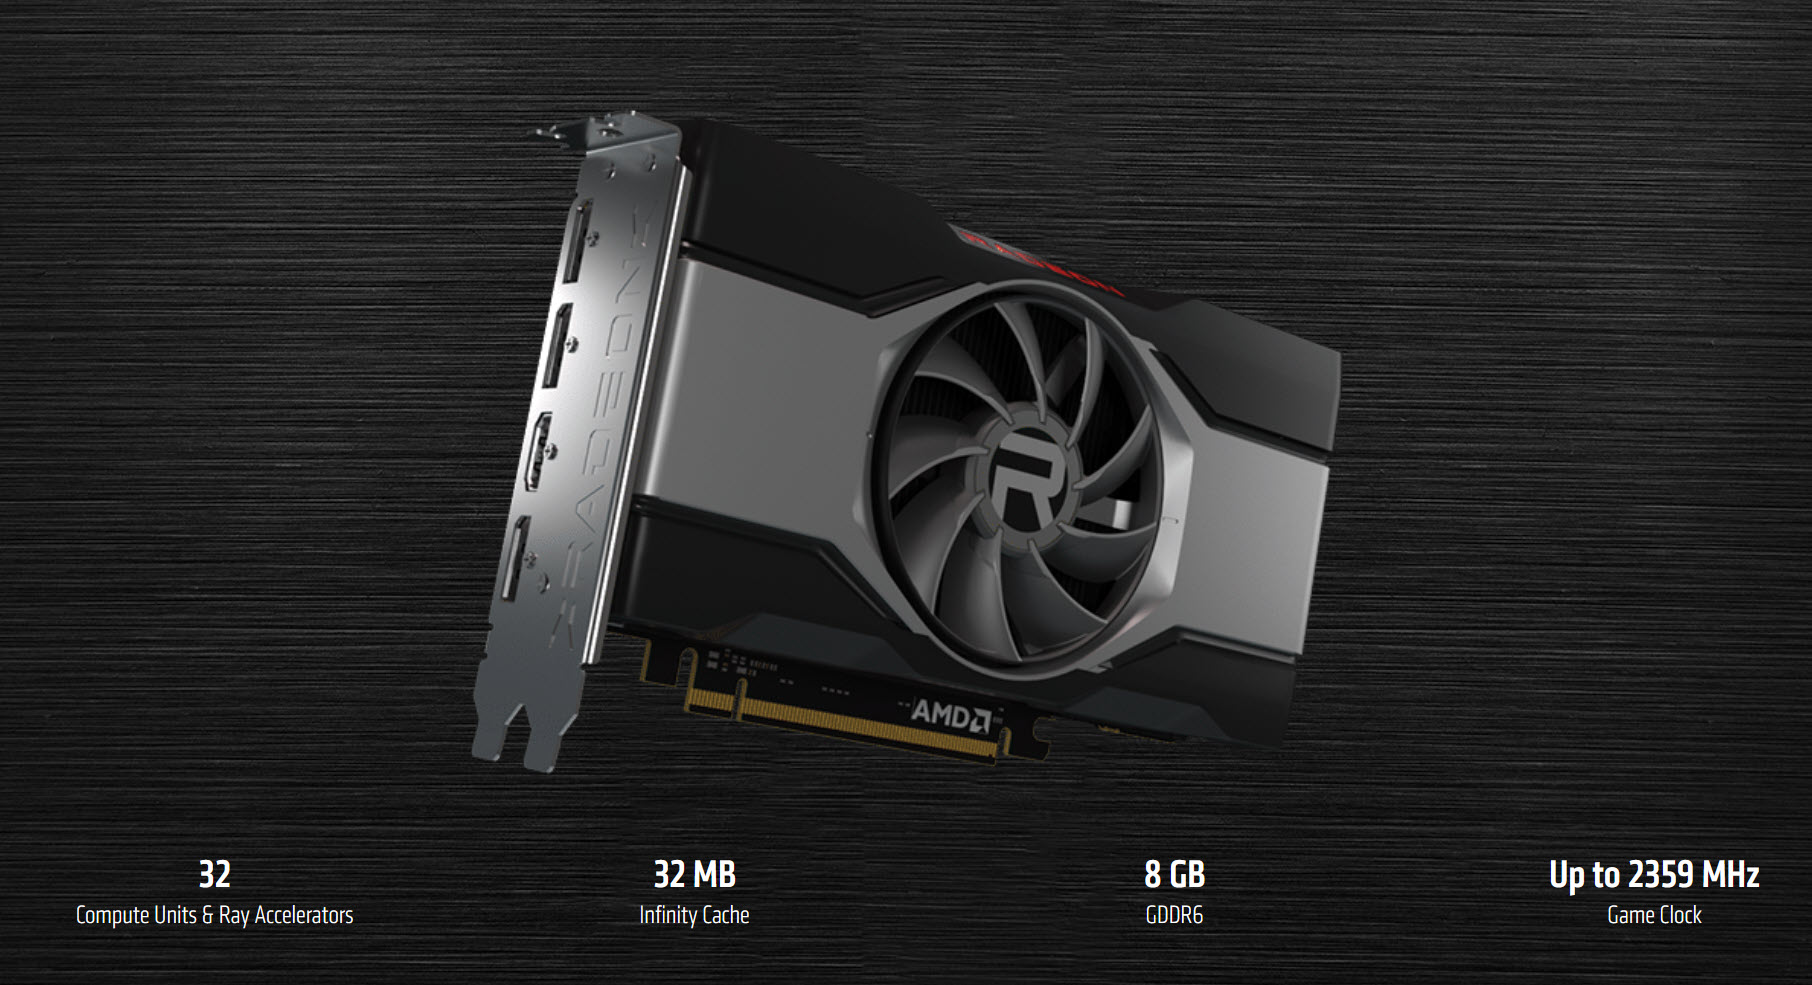 2021 08 12 13 10 51 AMD ประกาศวางจำหน่ายผลิตภัณฑ์กราฟิกการ์ด AMD Radeon RX 6600 XT ออกแบบมาเพื่อส่งมอบประสบการณ์การเล่นเกมเฟรมเรตและความคมชัดสูงในระดับความละเอียด 1080p